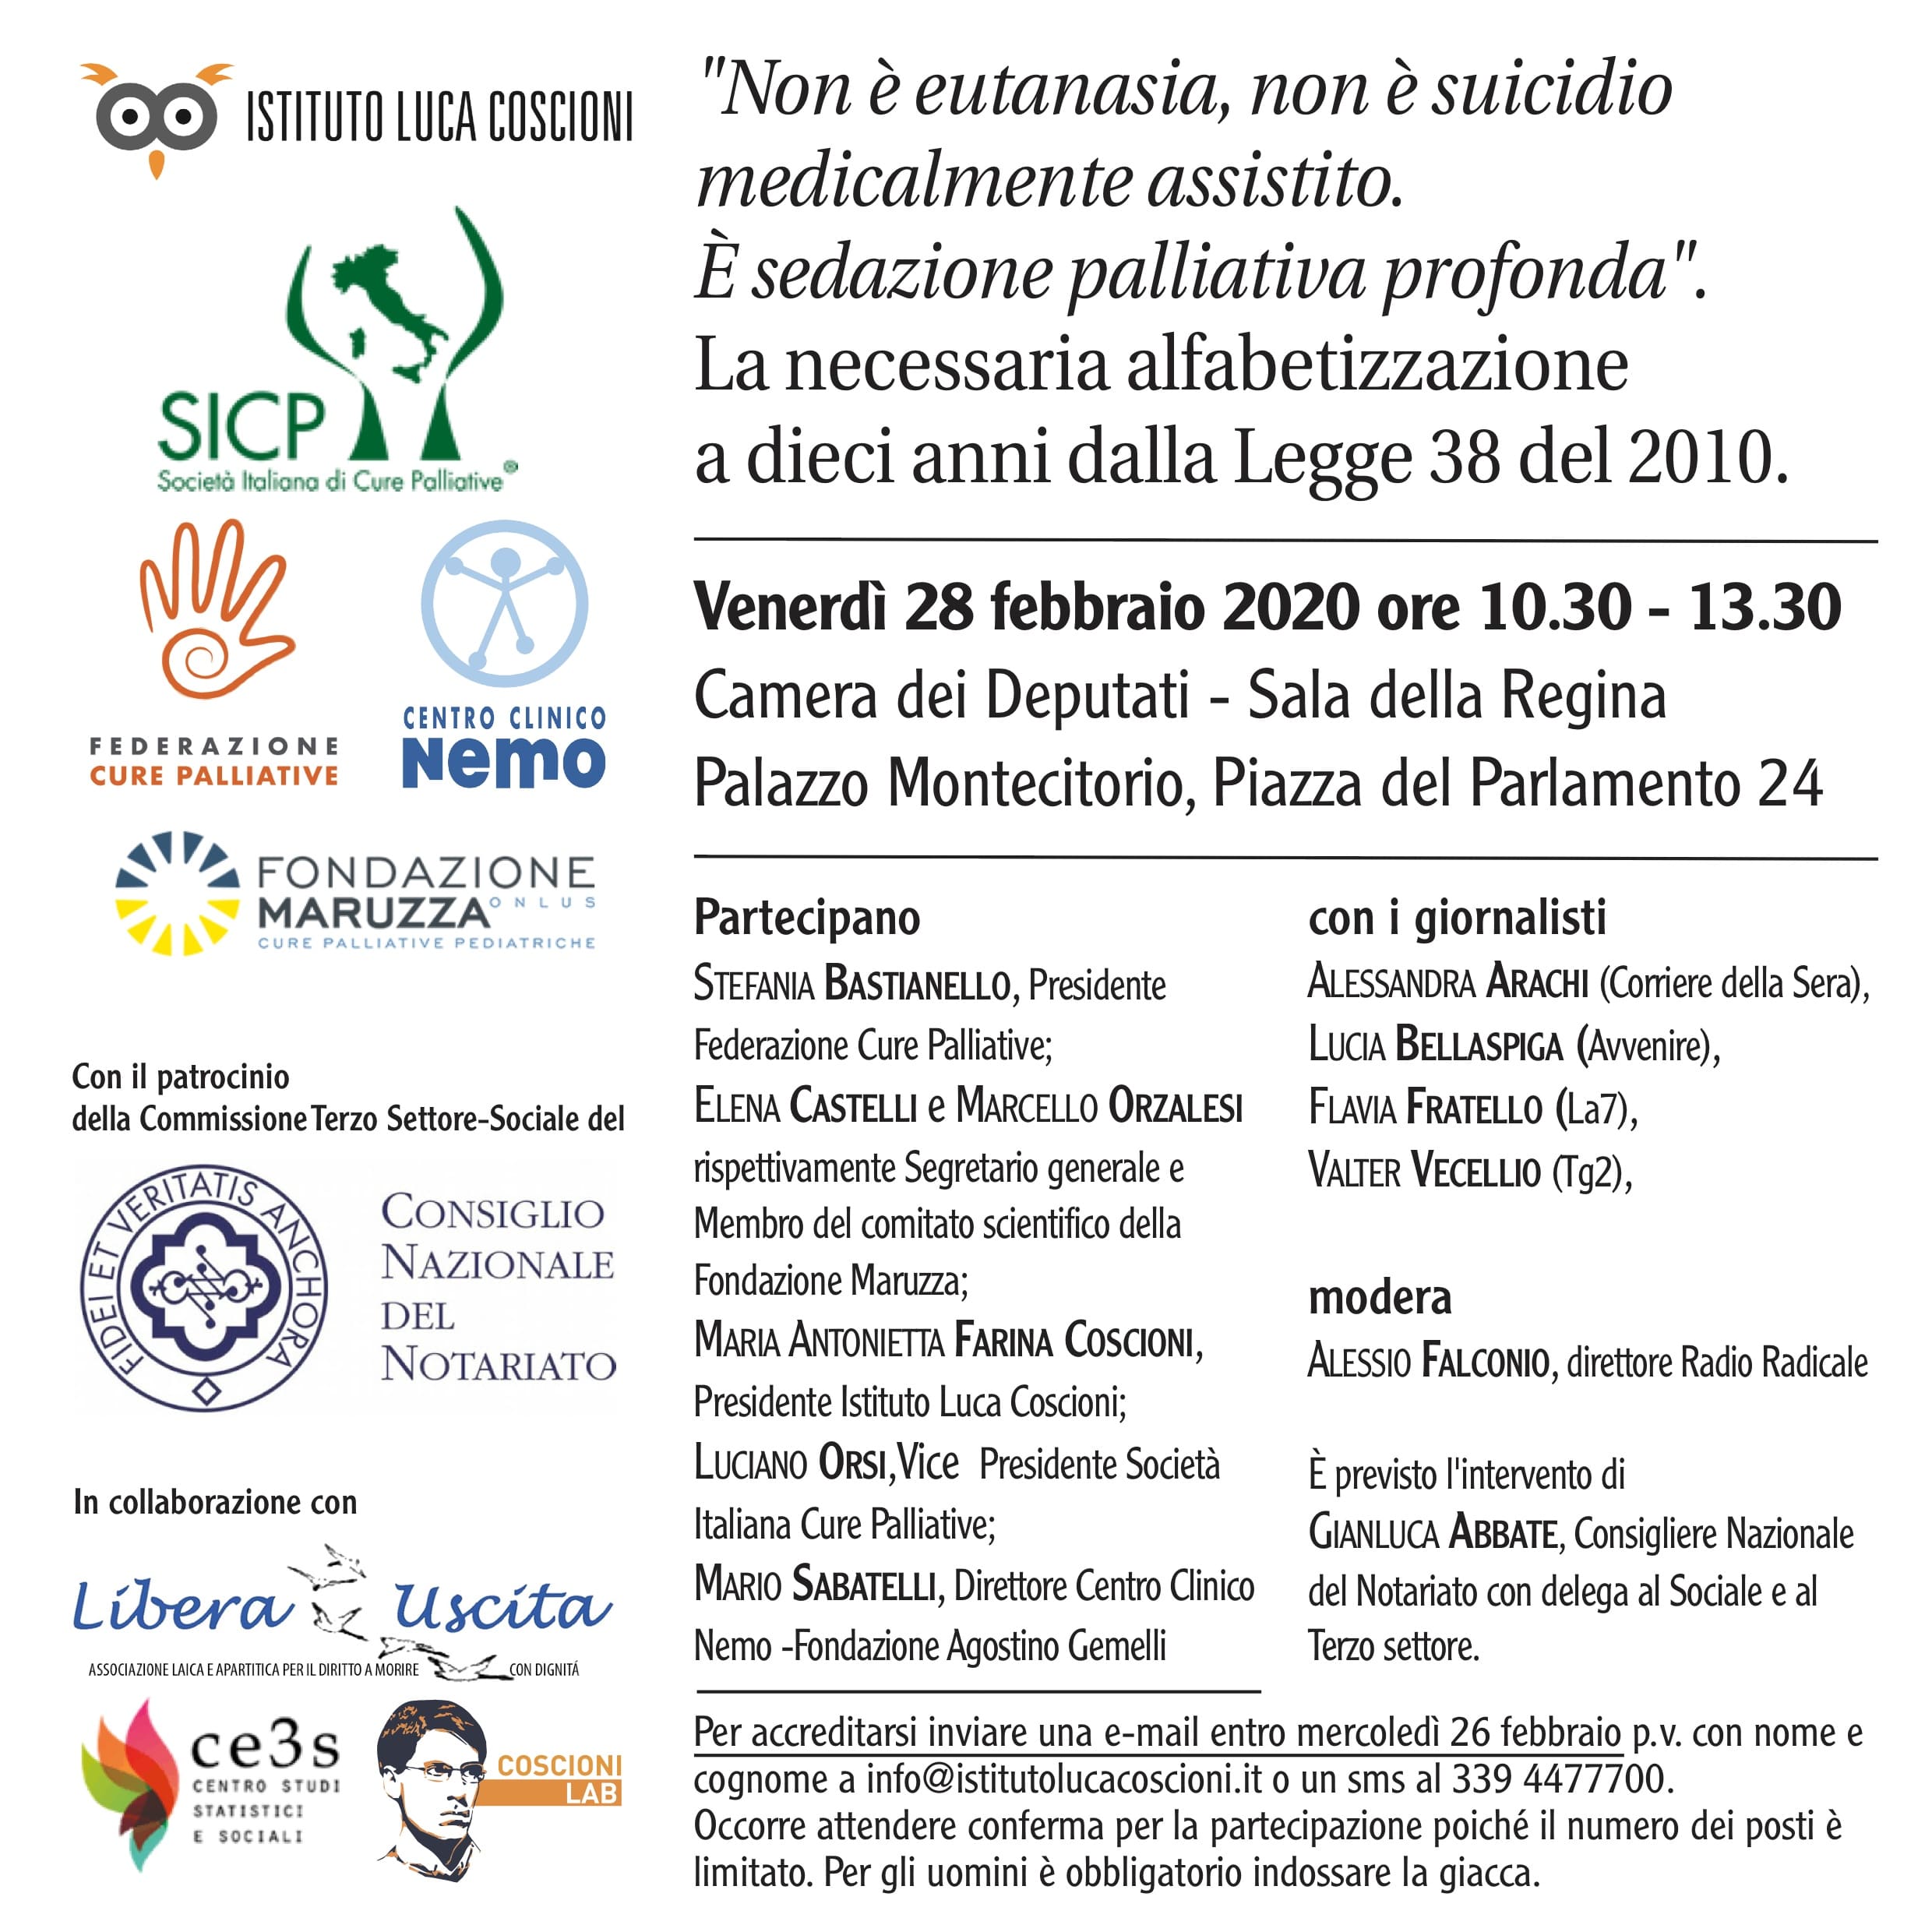 Featured image for “Roma, venerdì 28 febbraio 2020 Save the date”